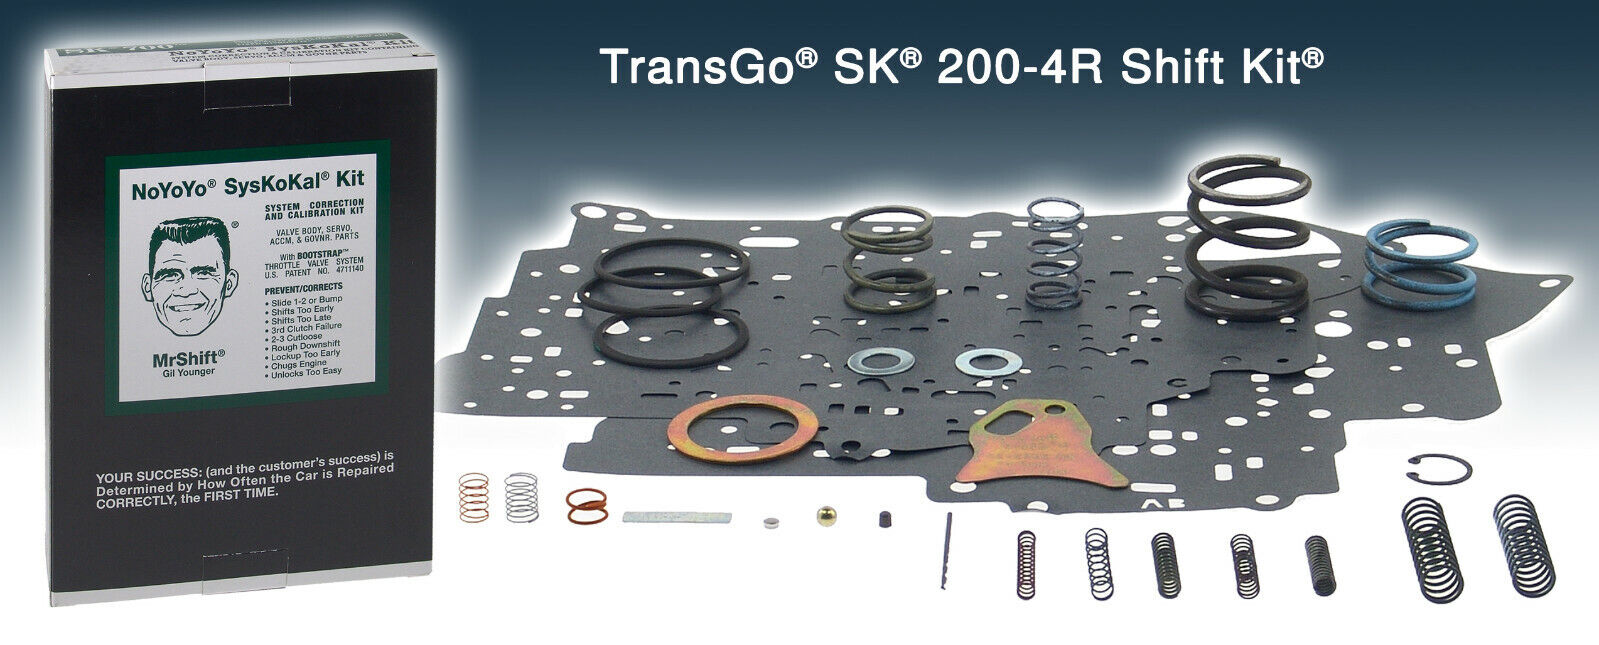 TransGo SK 200-4R Shift Kit fits all 2004R 1981-Up